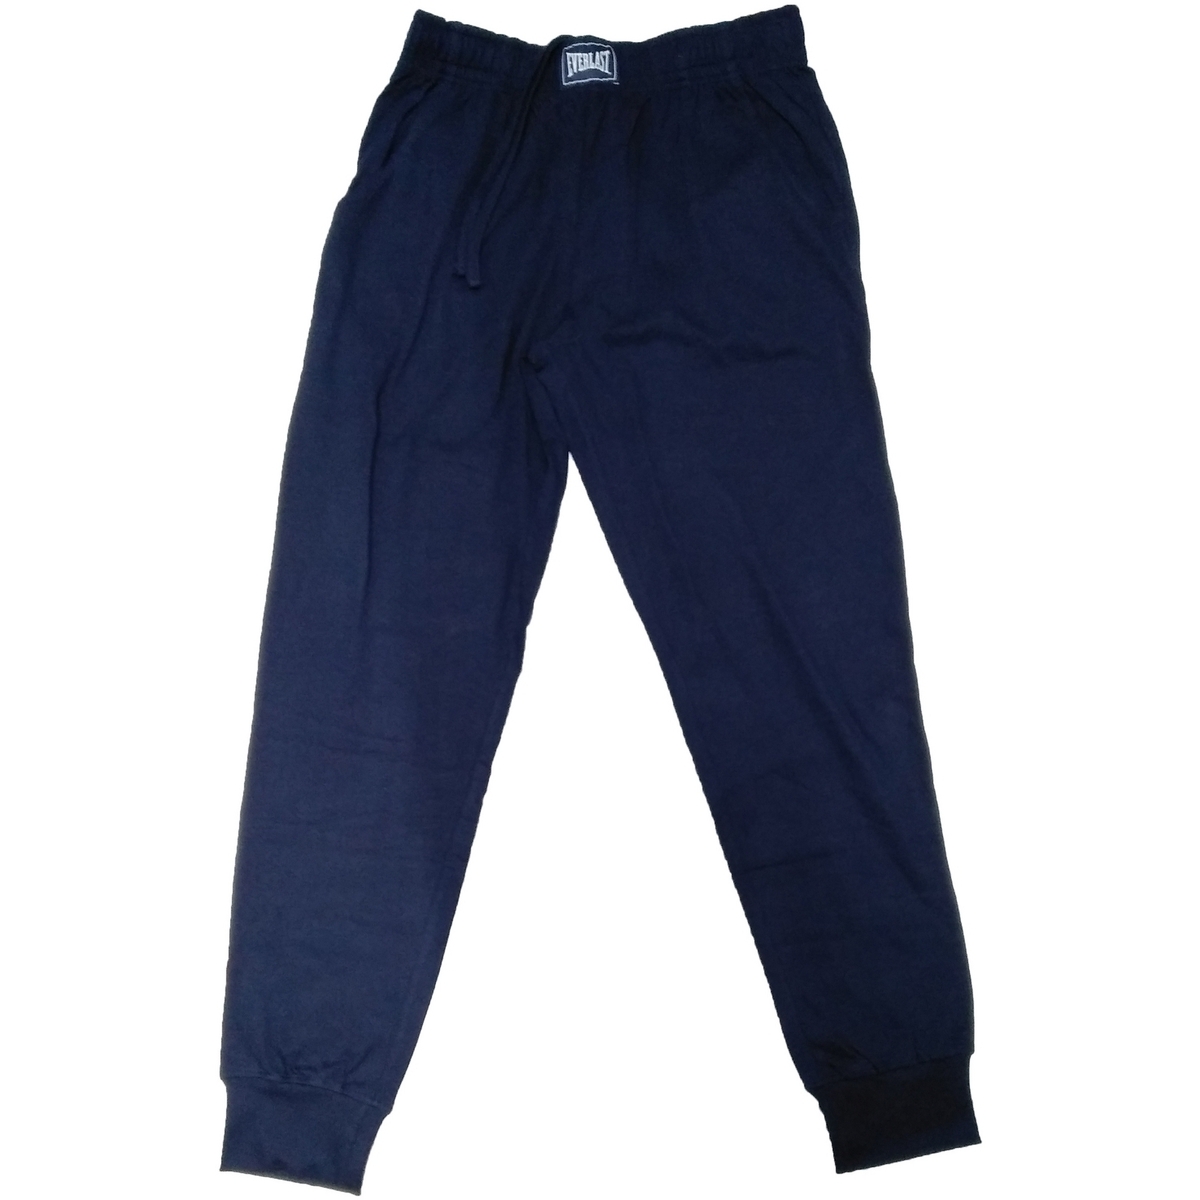 Vêtements Homme Pantalons, jupes, shorts 27M142J09 Bleu